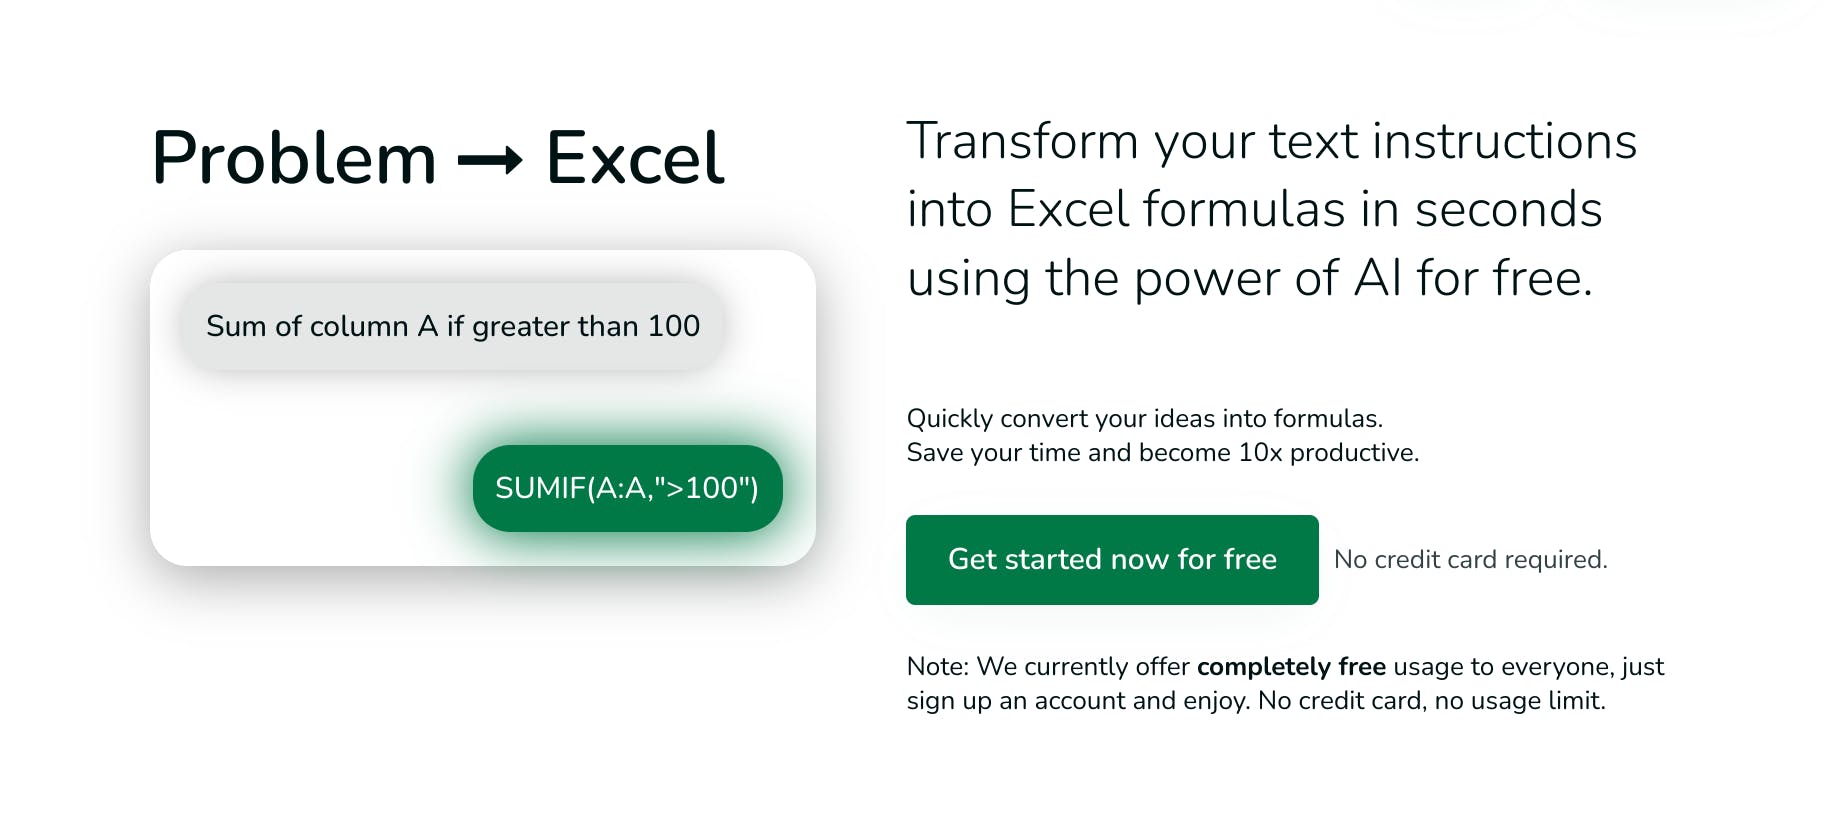 Excel 公式化器- 将文本说明转换为Excel 公式